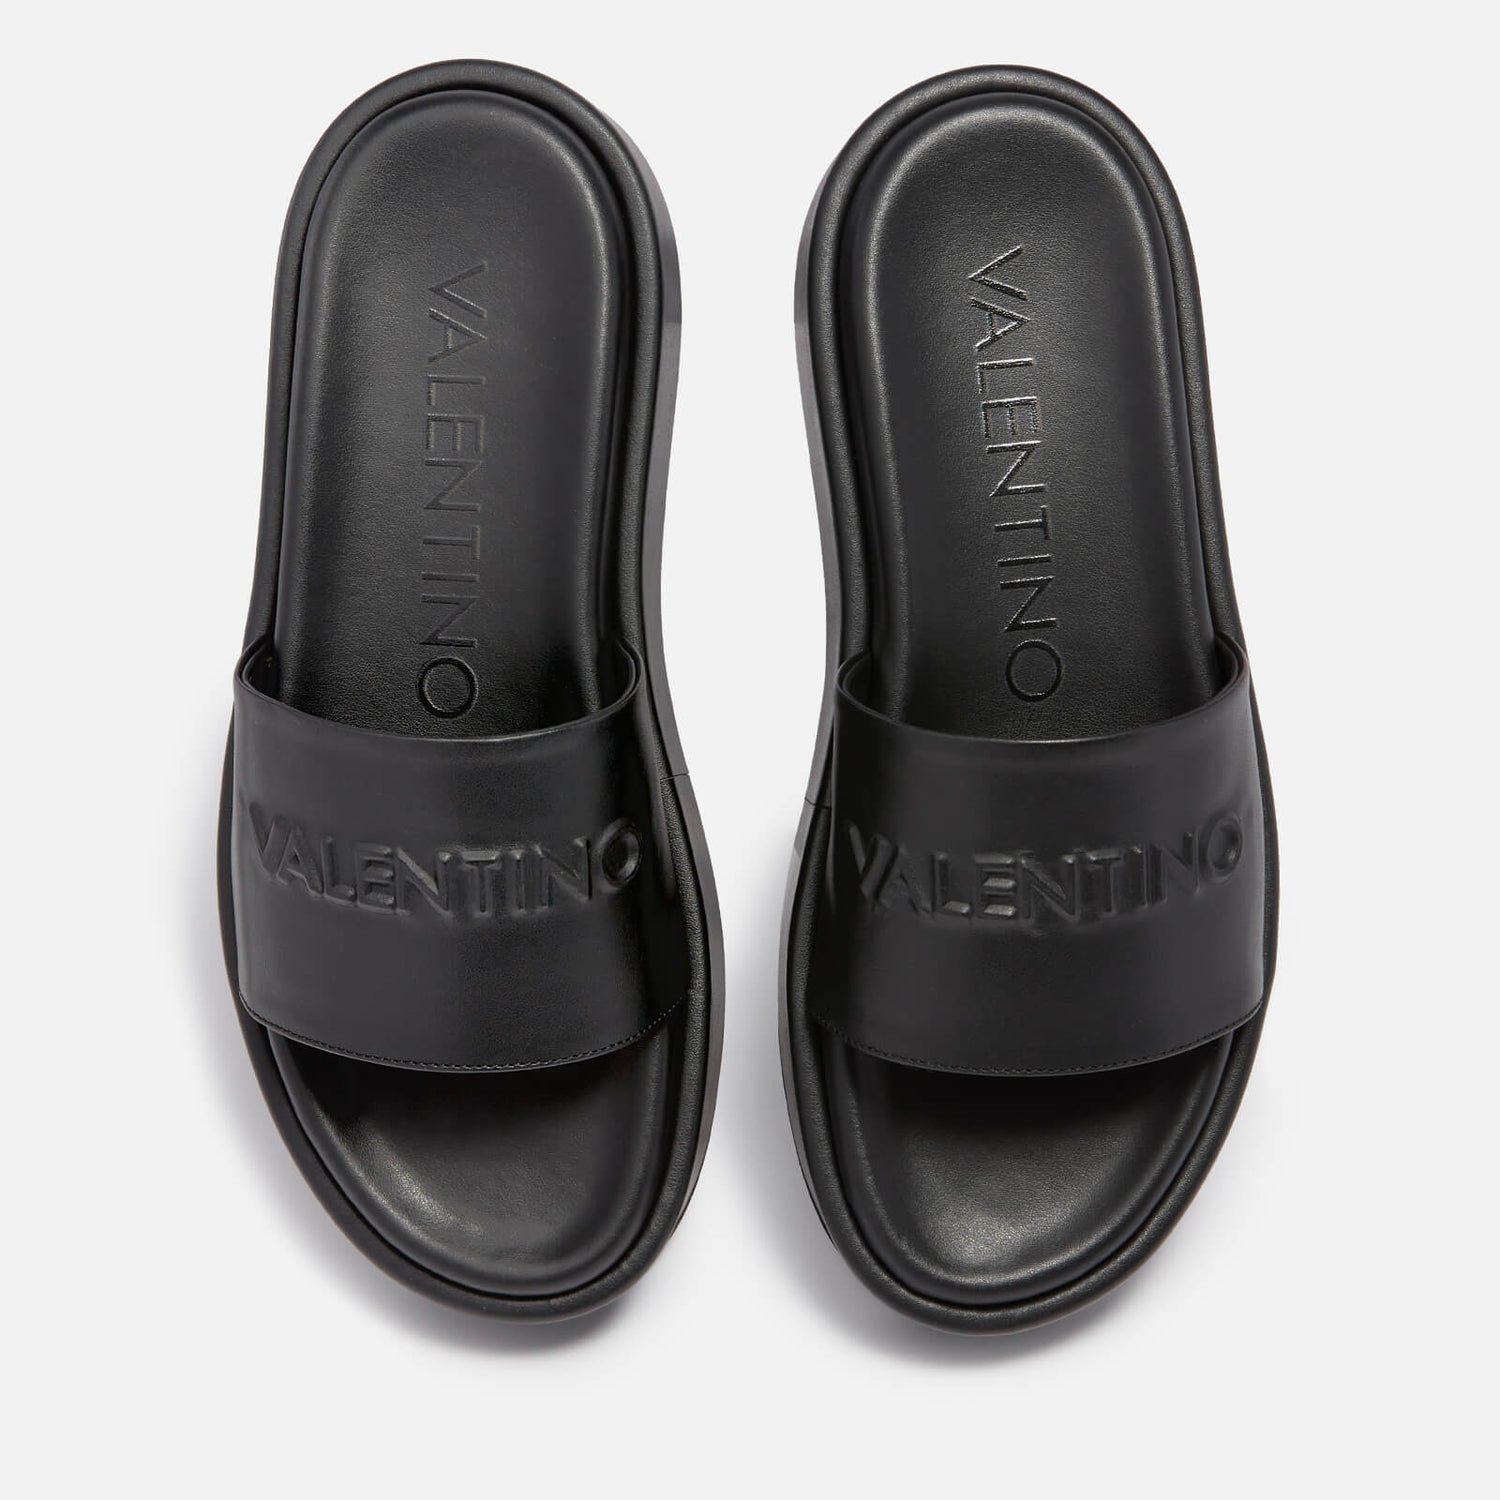 Valentino Shoes Women's Leather Flatform Sandals - Black - UK 3